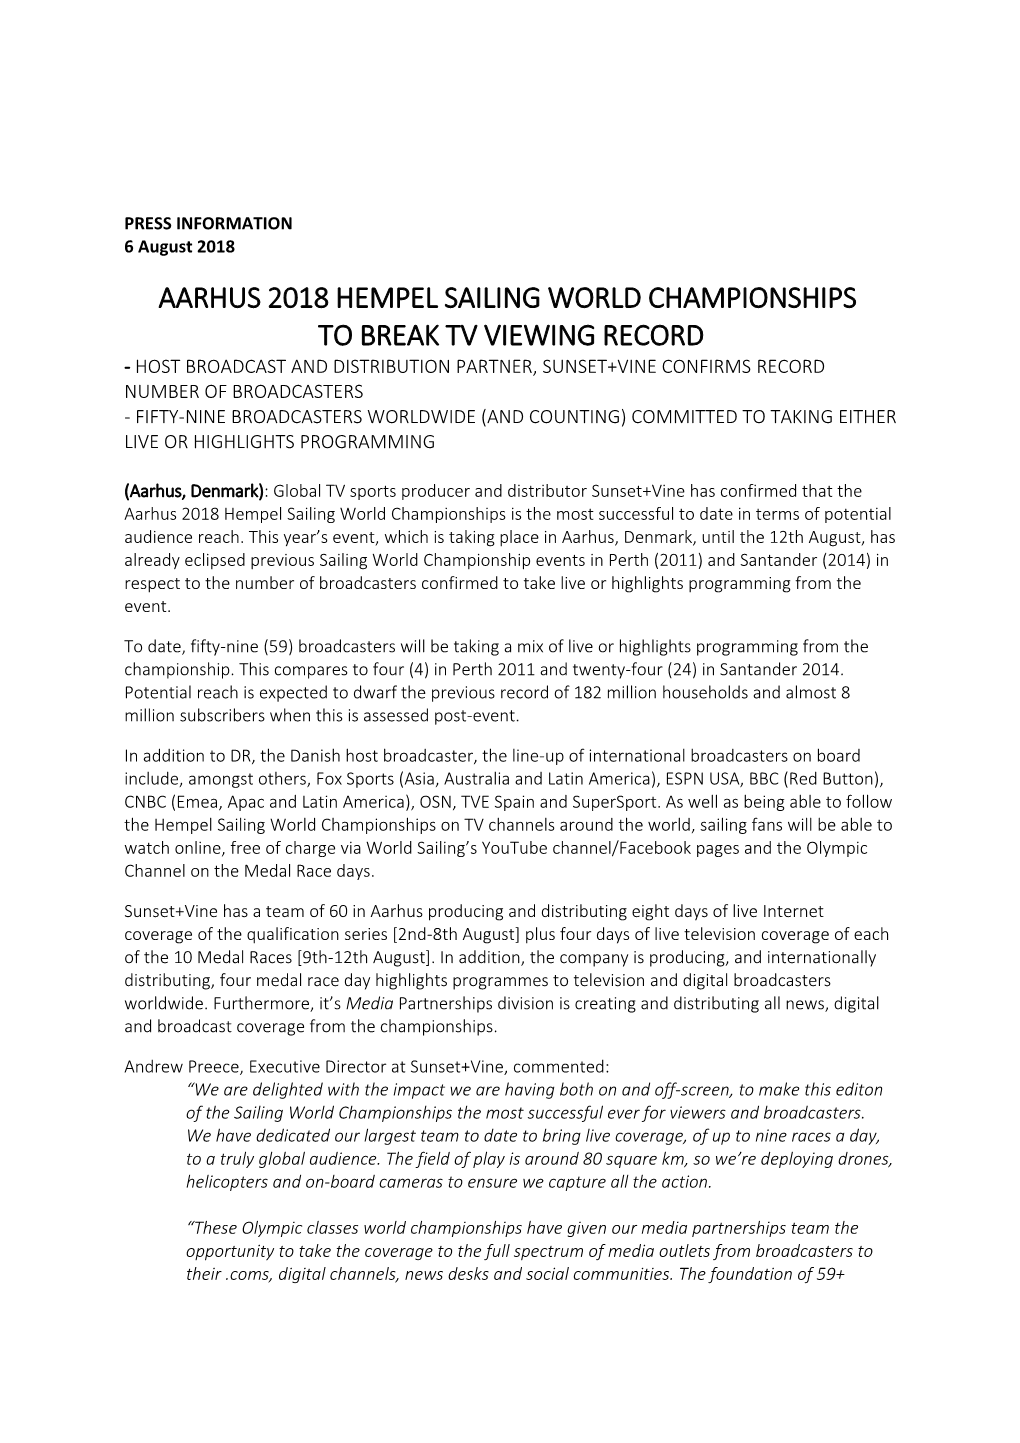 Aarhus 2018 Hempel Sailing World Championships